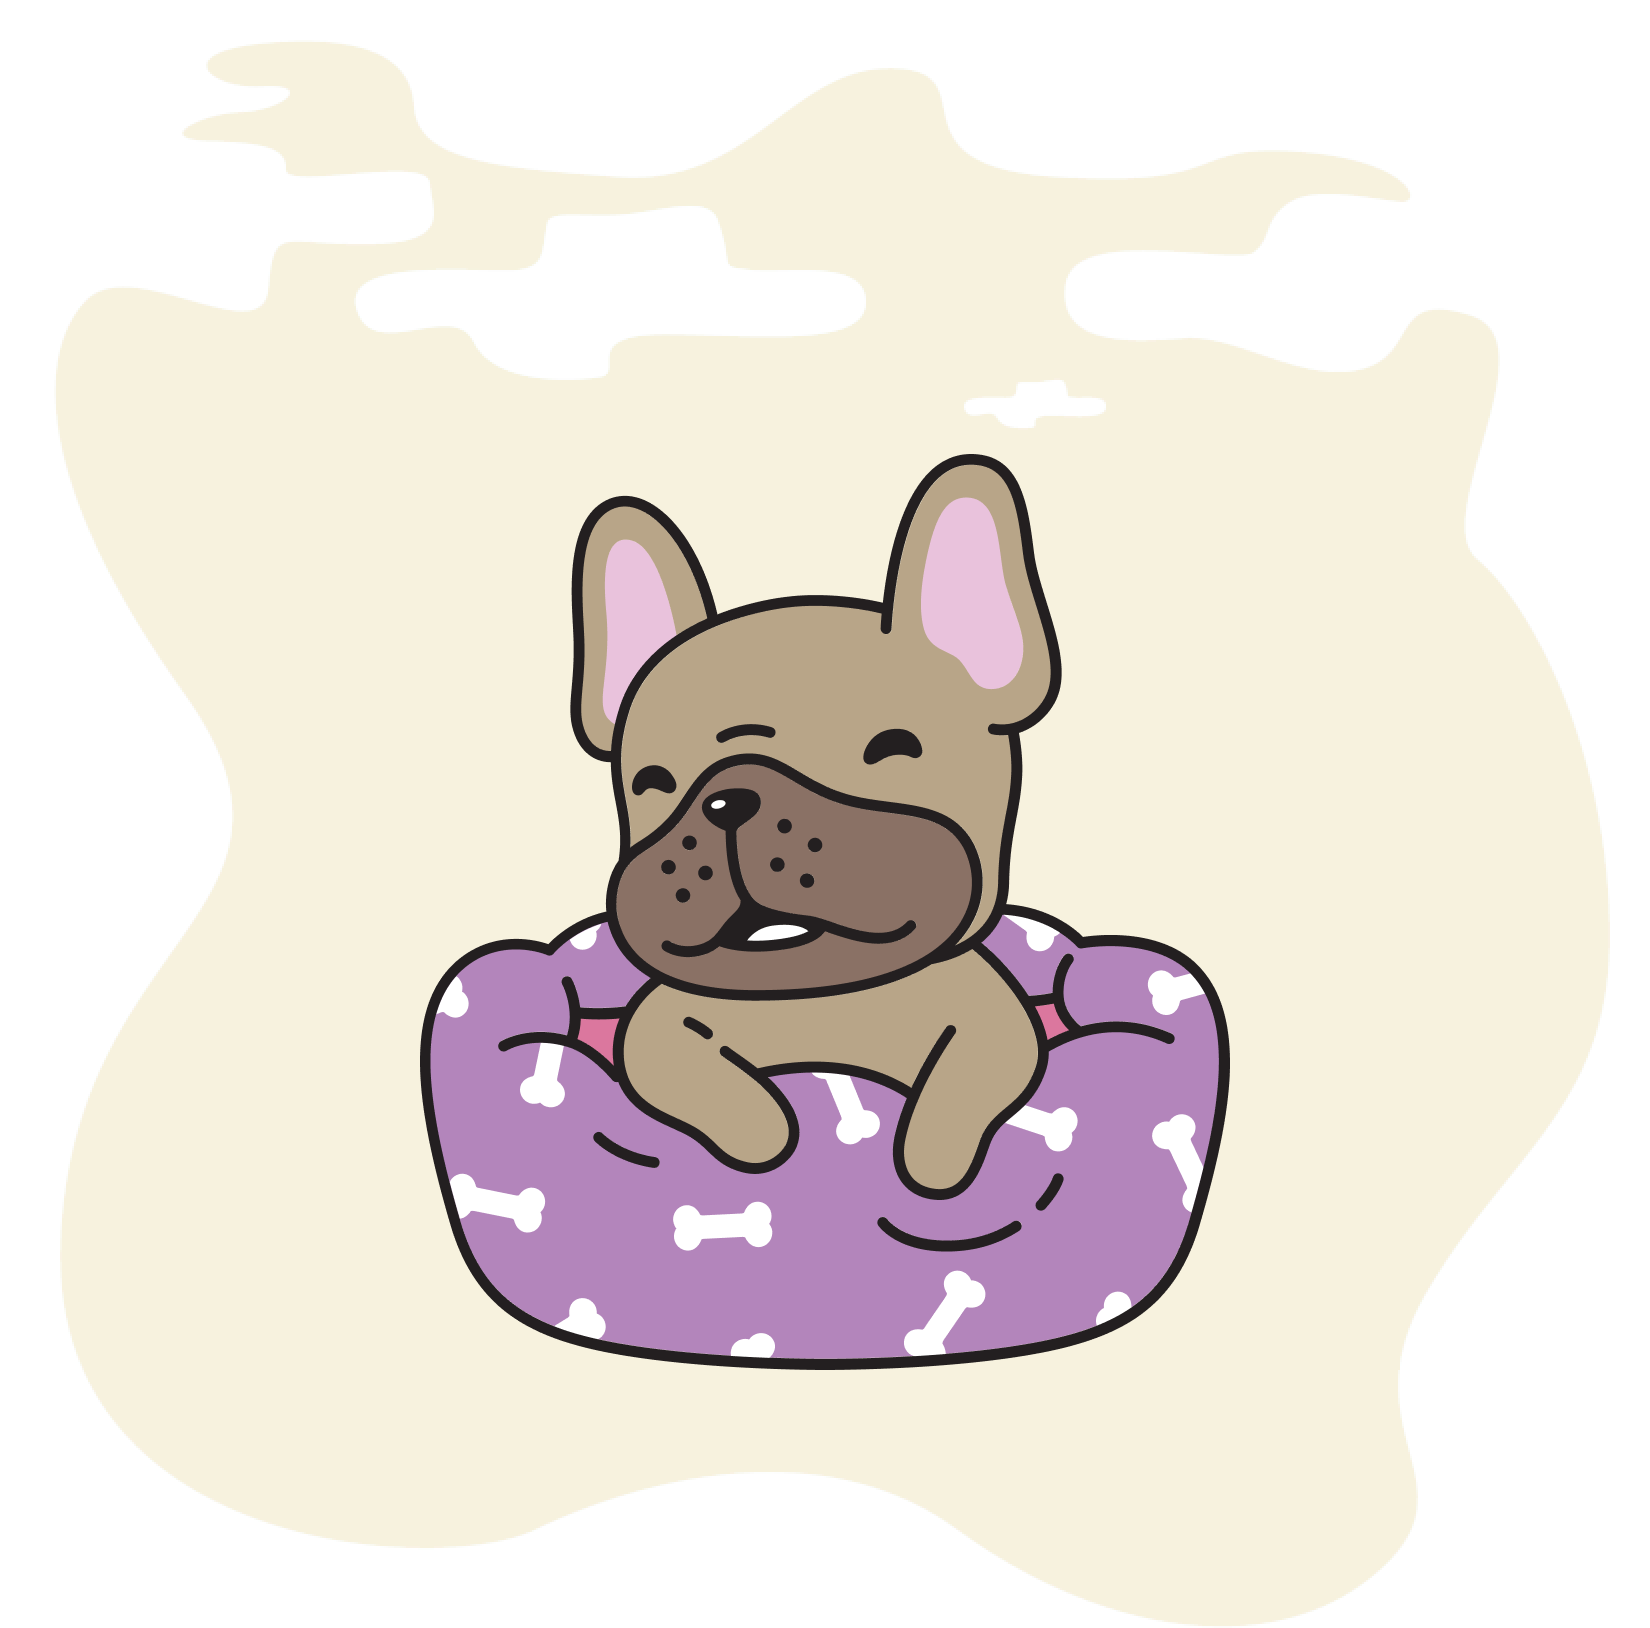 A cartoon puppy sitting in a dog bed.